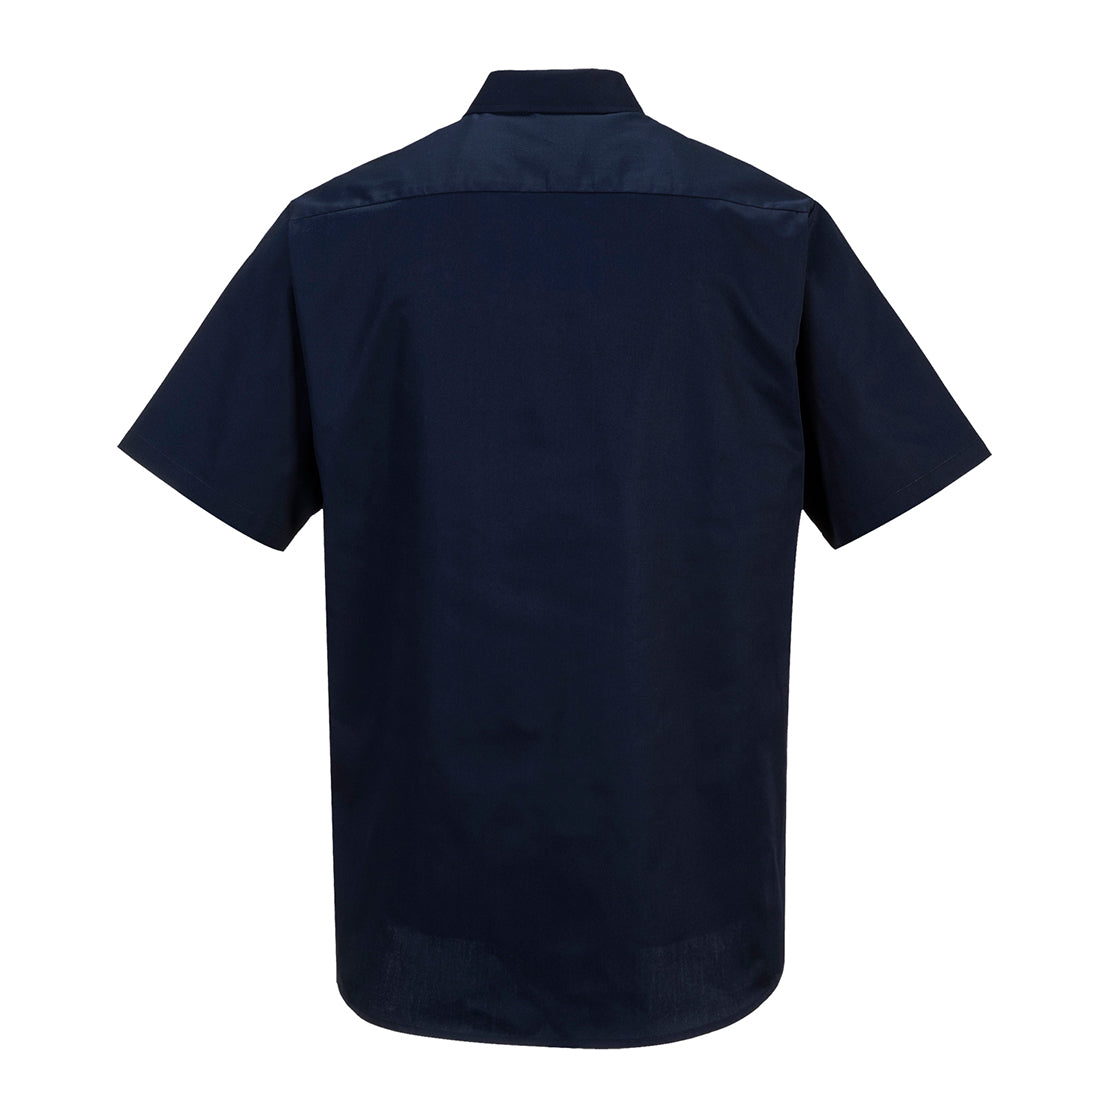 Navy Industrial Work Shirt | S124 NAVY INDUSTRIAL